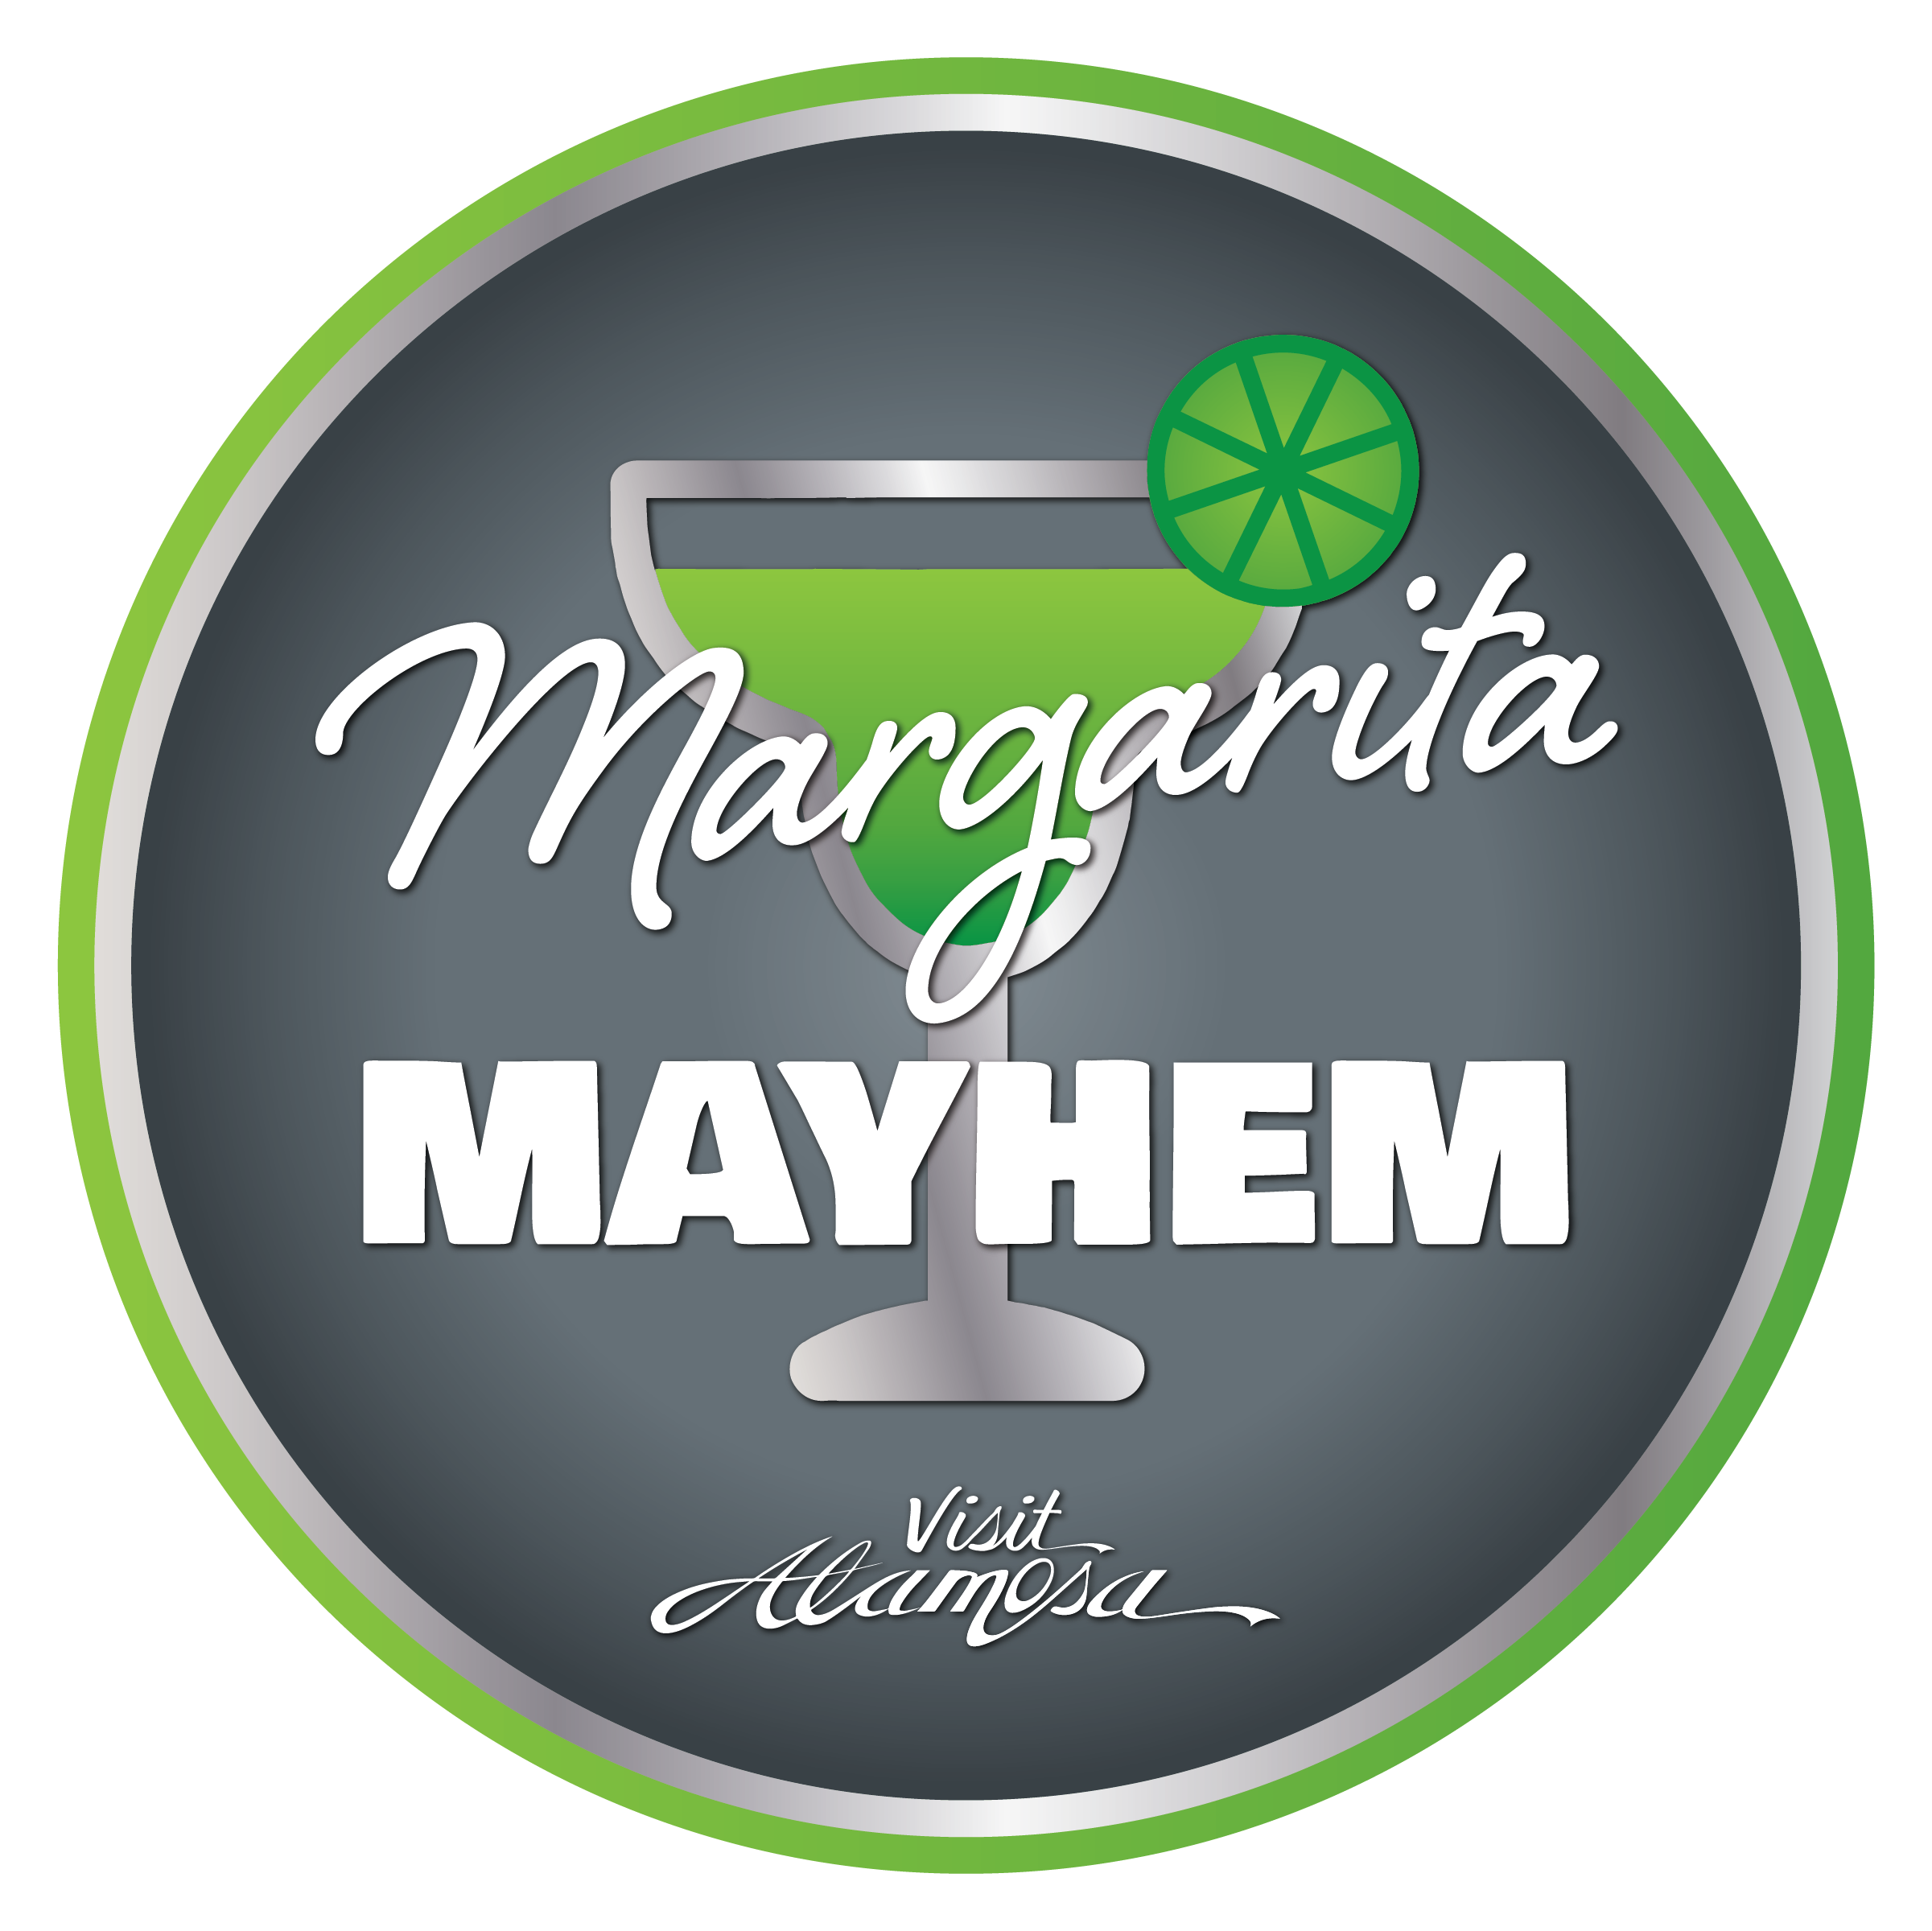 Margarita Mayhem Circle Grey Background copy